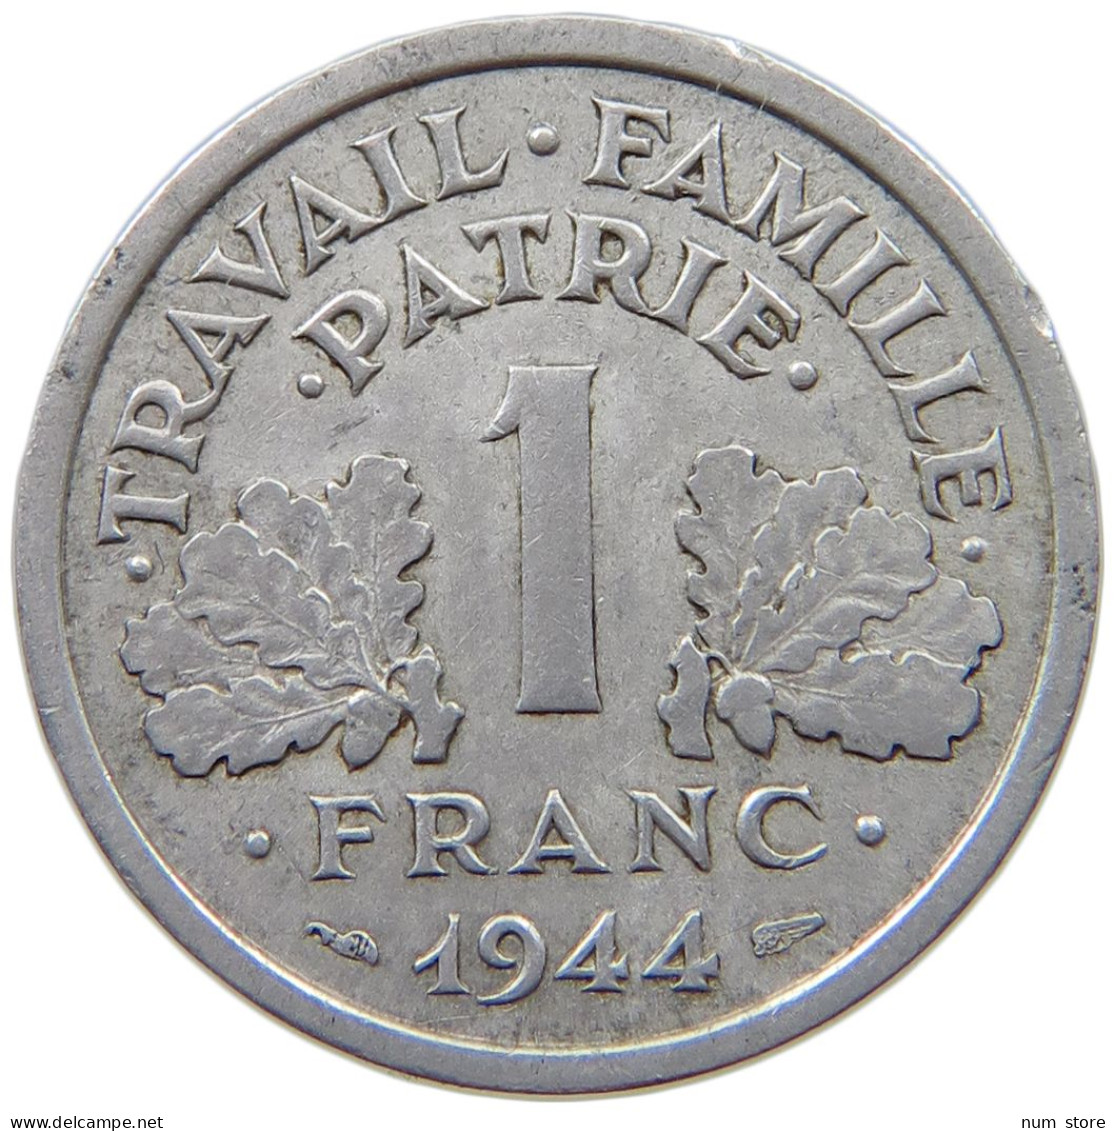 FRANCE 1 FRANC 1944 C #a021 0971 - 1 Franc